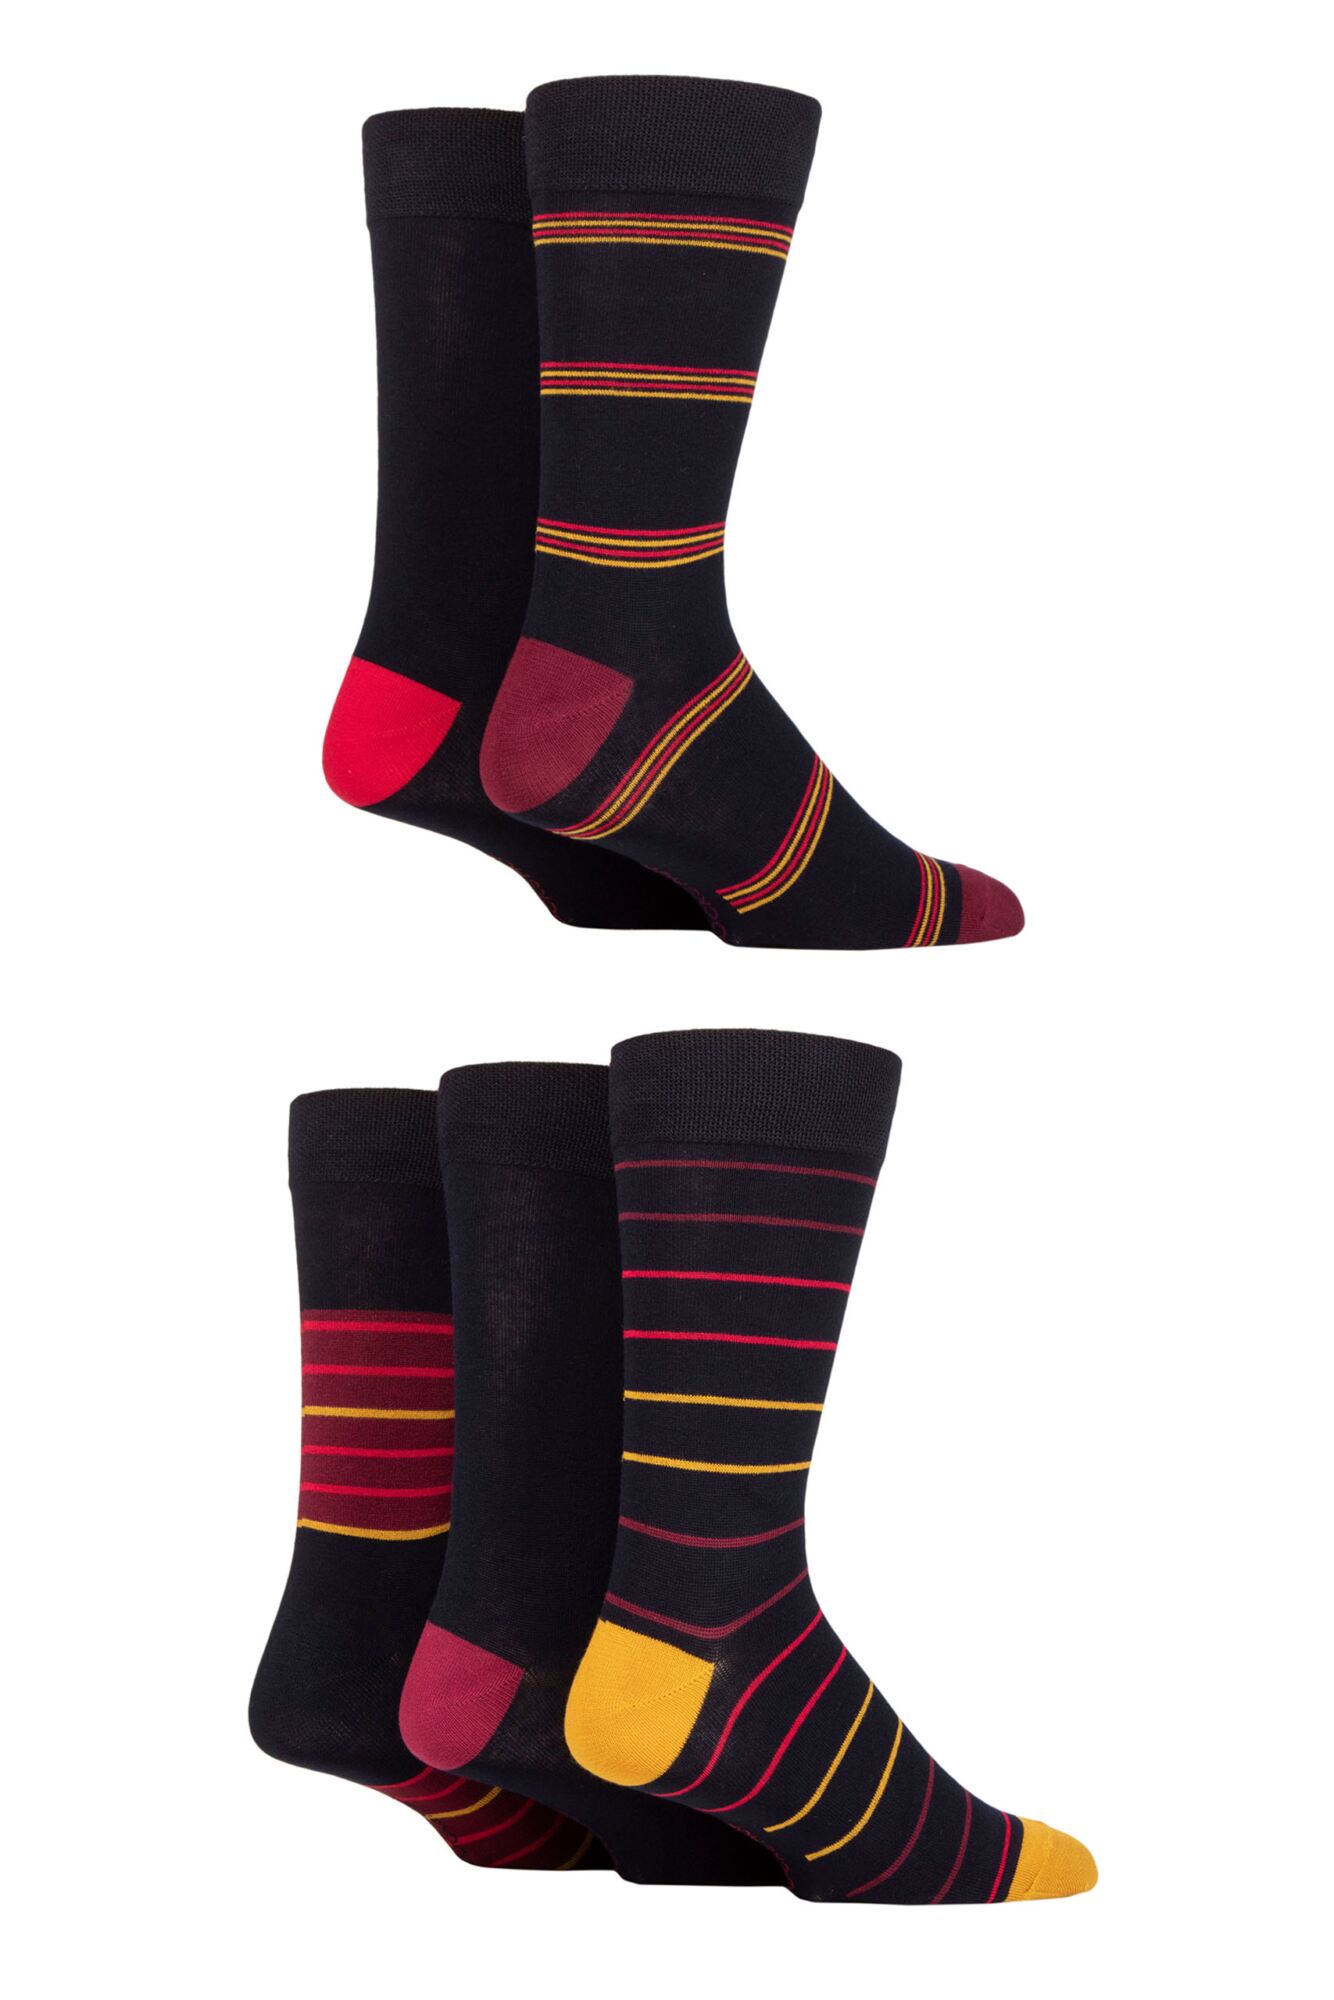 5 Pair Plain, Striped and Patterned Bamboo Socks Men's - SOCKSHOP